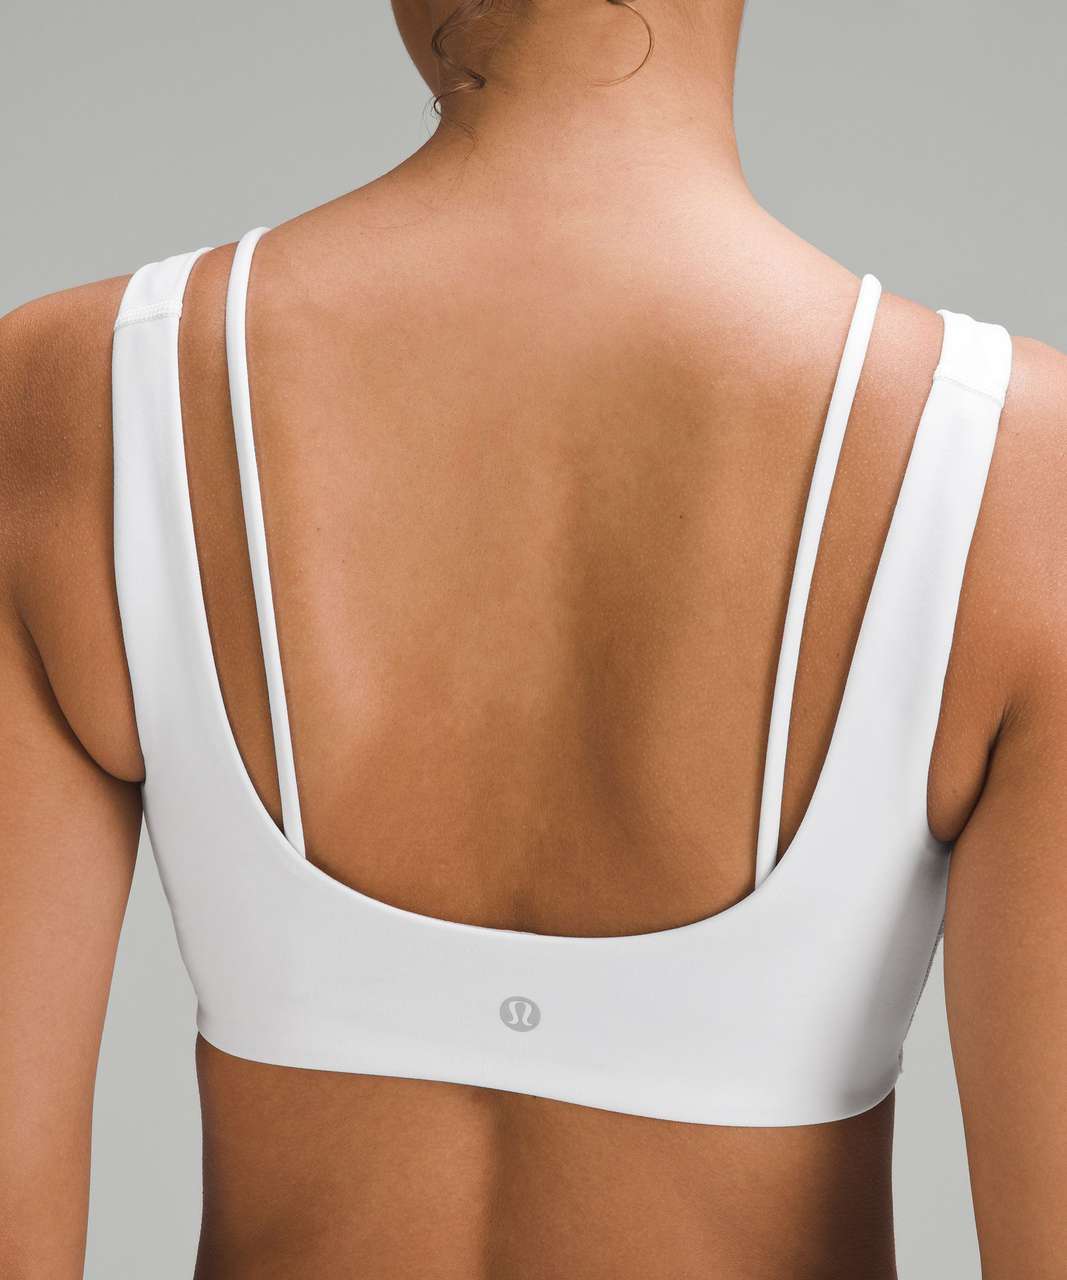 Lululemon Sports Bra White Size 32 B - $35 (41% Off Retail) - From